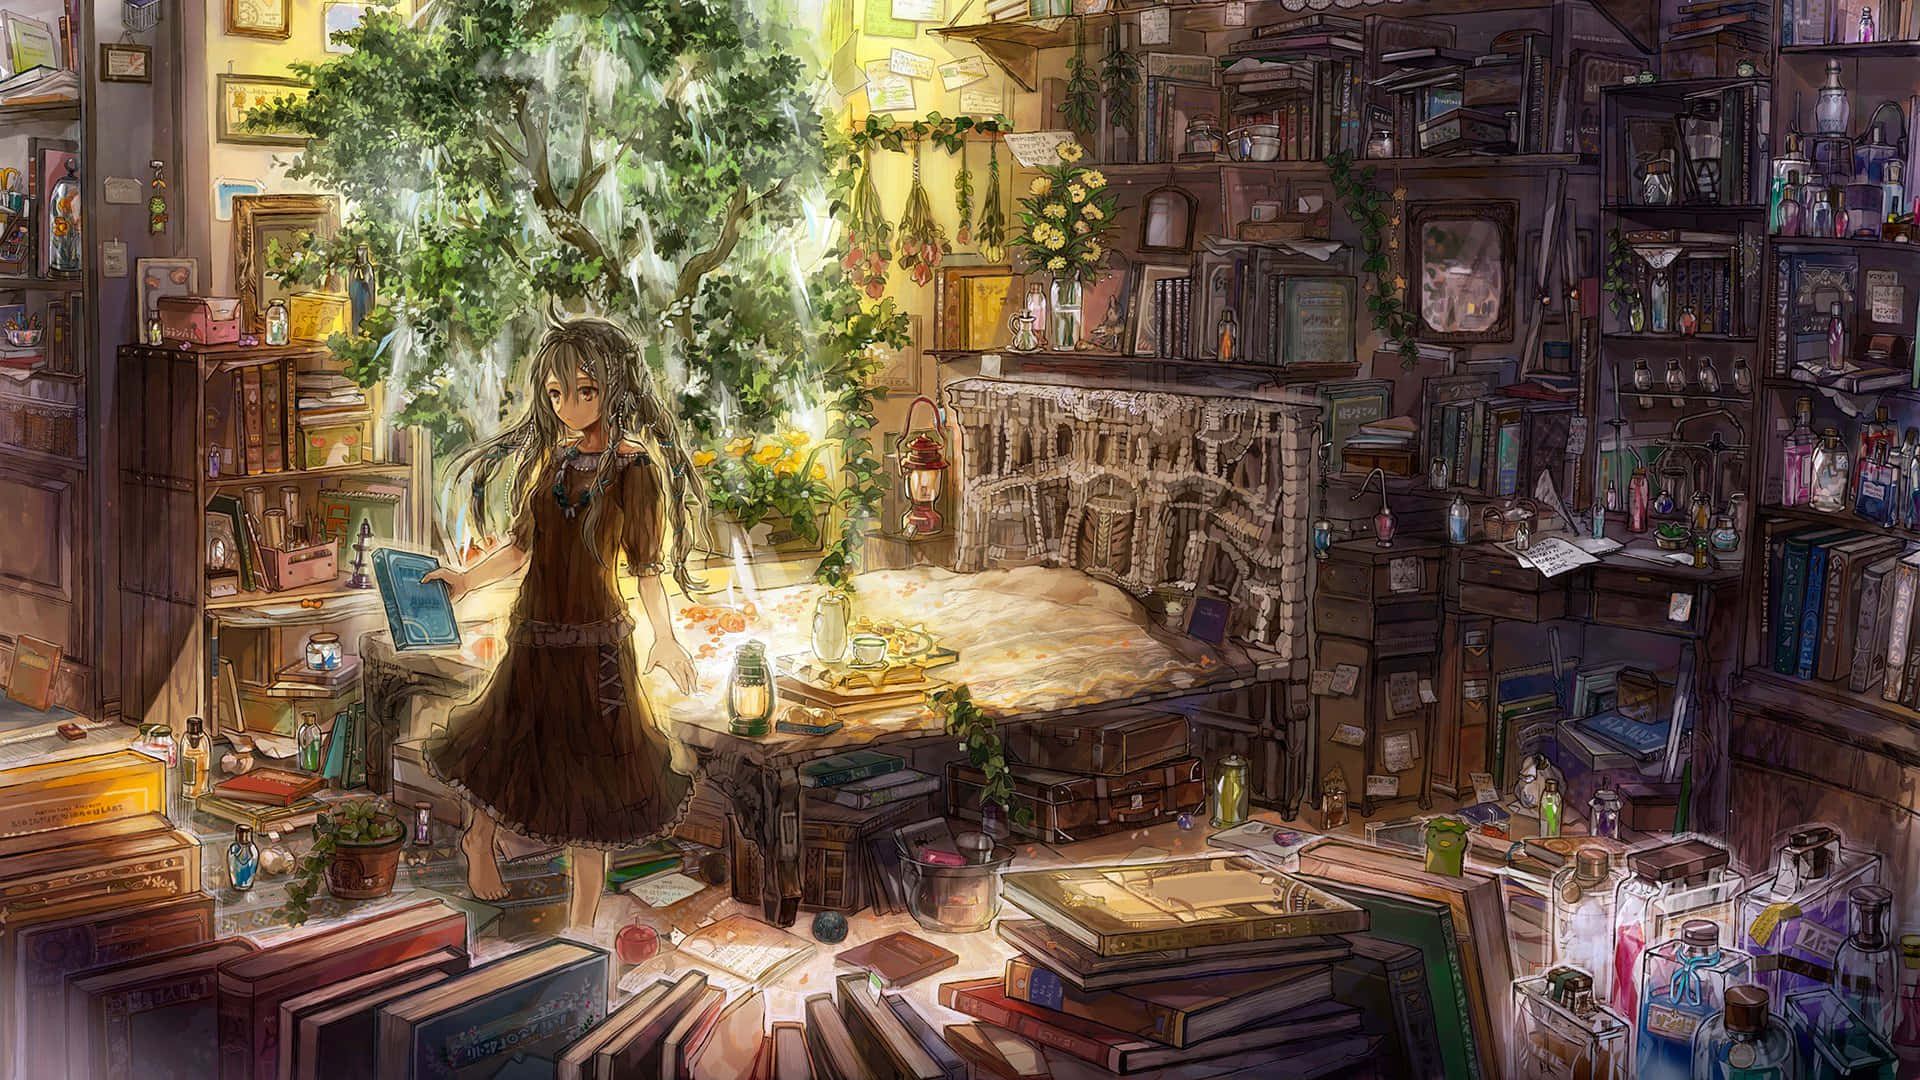 Enchanted Library Reading Nook.jpg Wallpaper